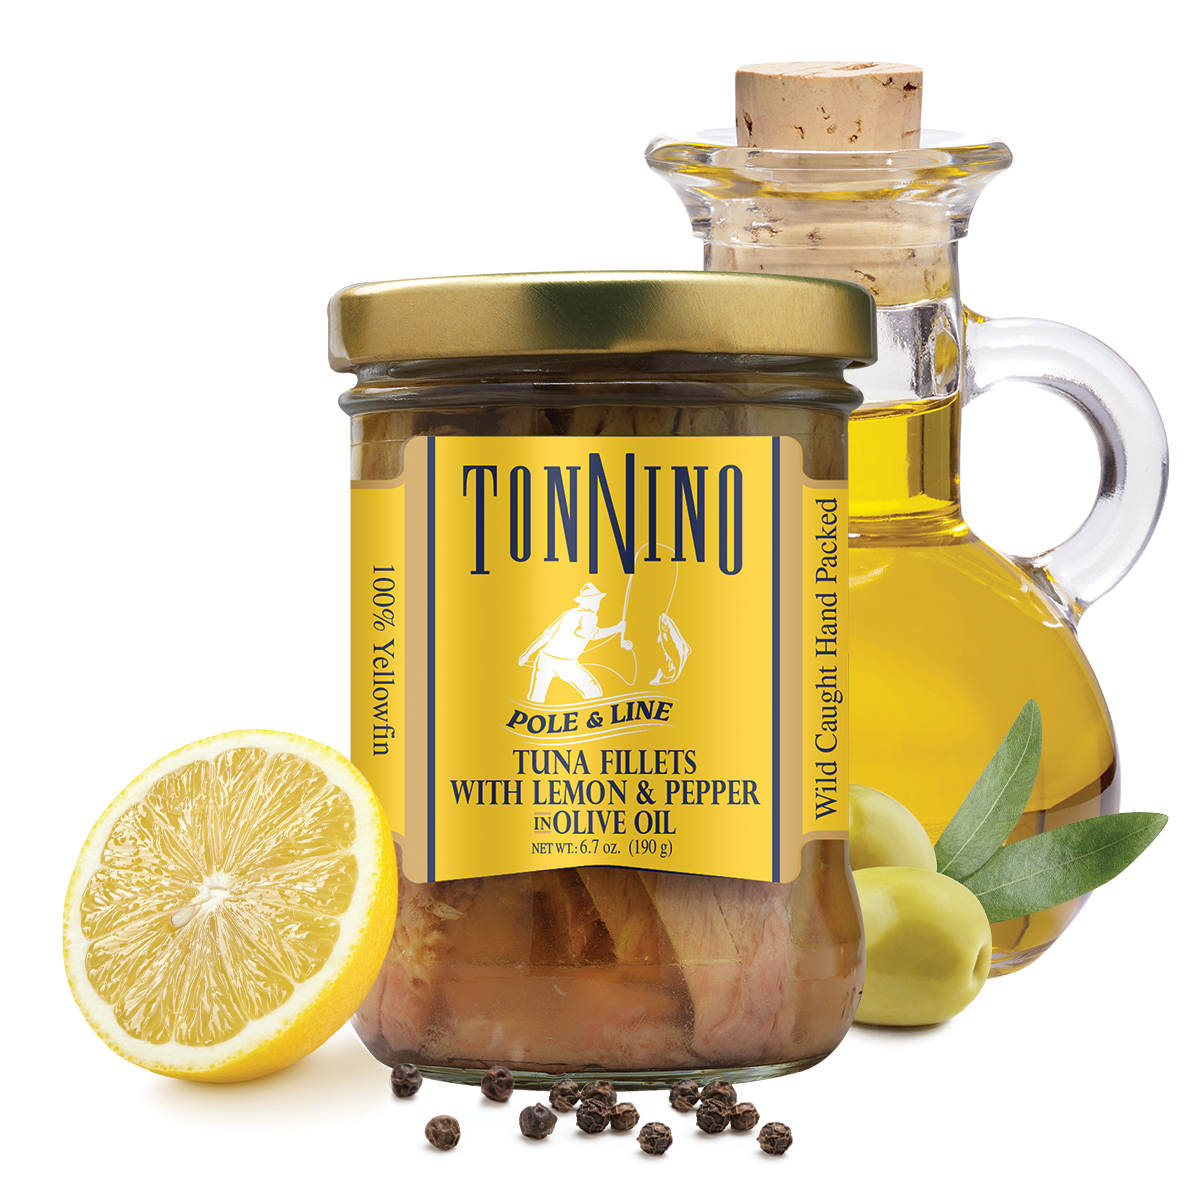 Tonnino Pole & Line Lemon & Pepper Tuna Fillets Olive Oil, 6.7 oz